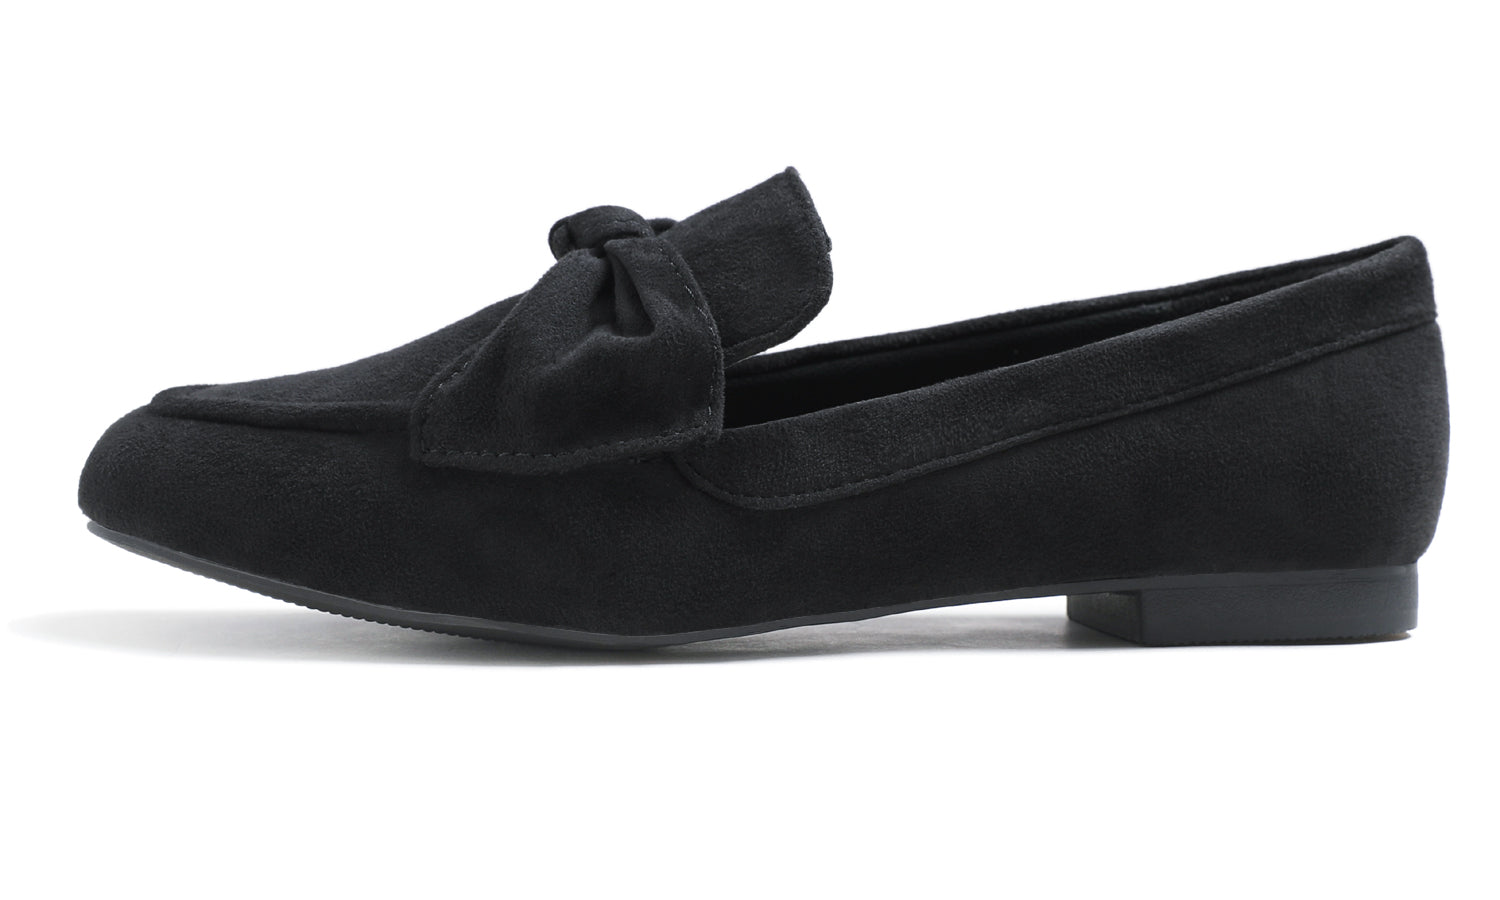 Feversole Women's Fashion Trim Deco Loafer Flats Black Faux Suede Bow Knot